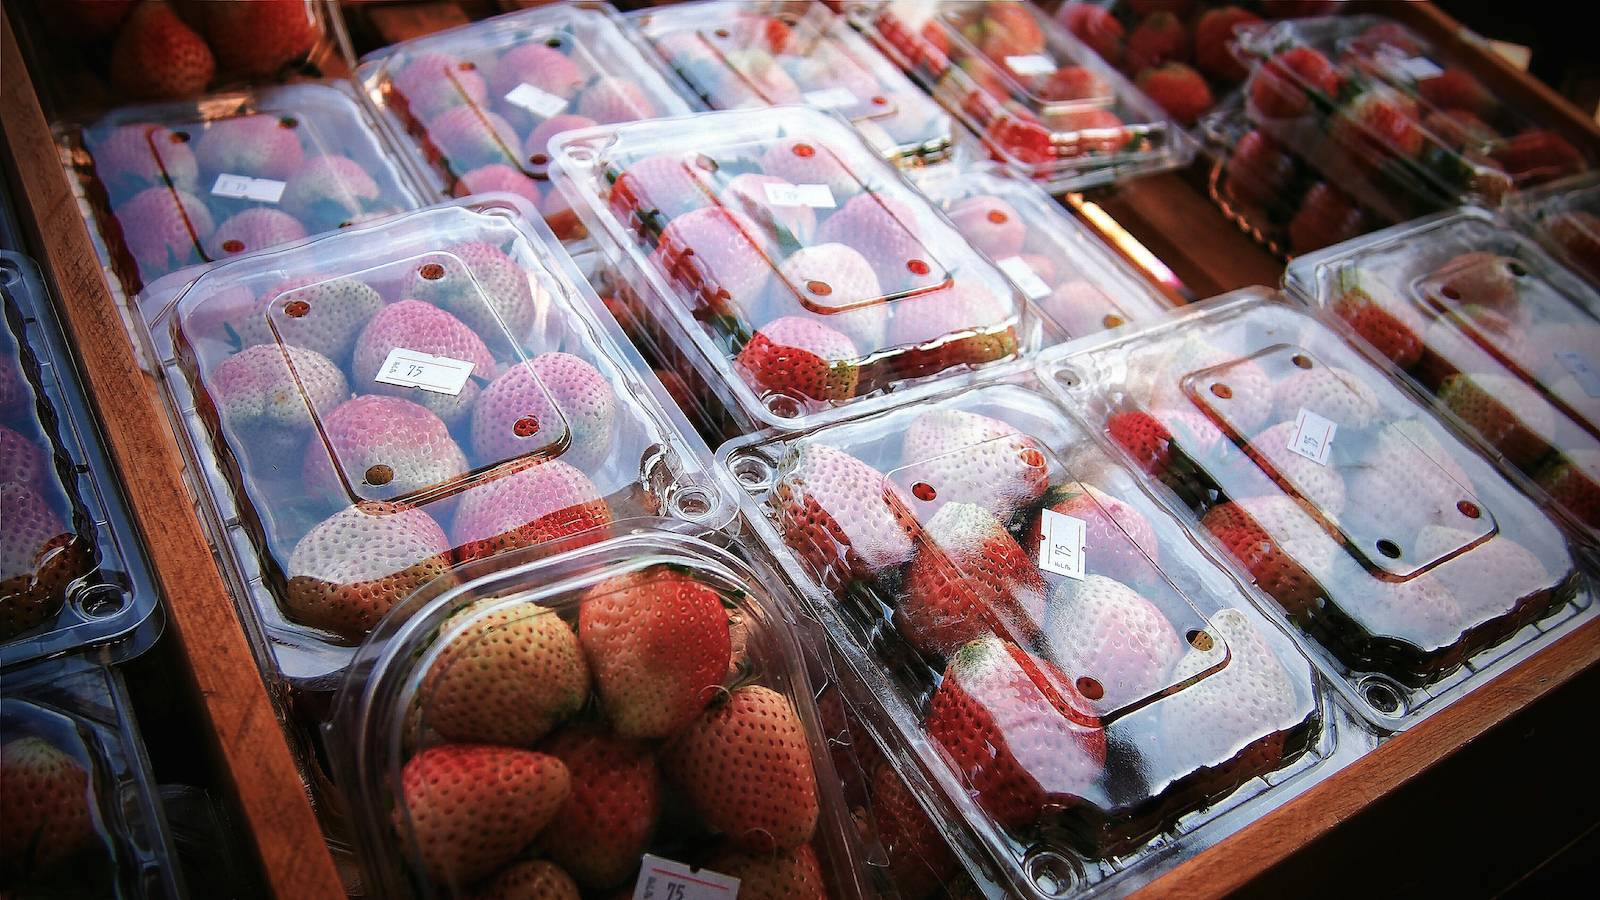 Strawberries in plastic clamshells